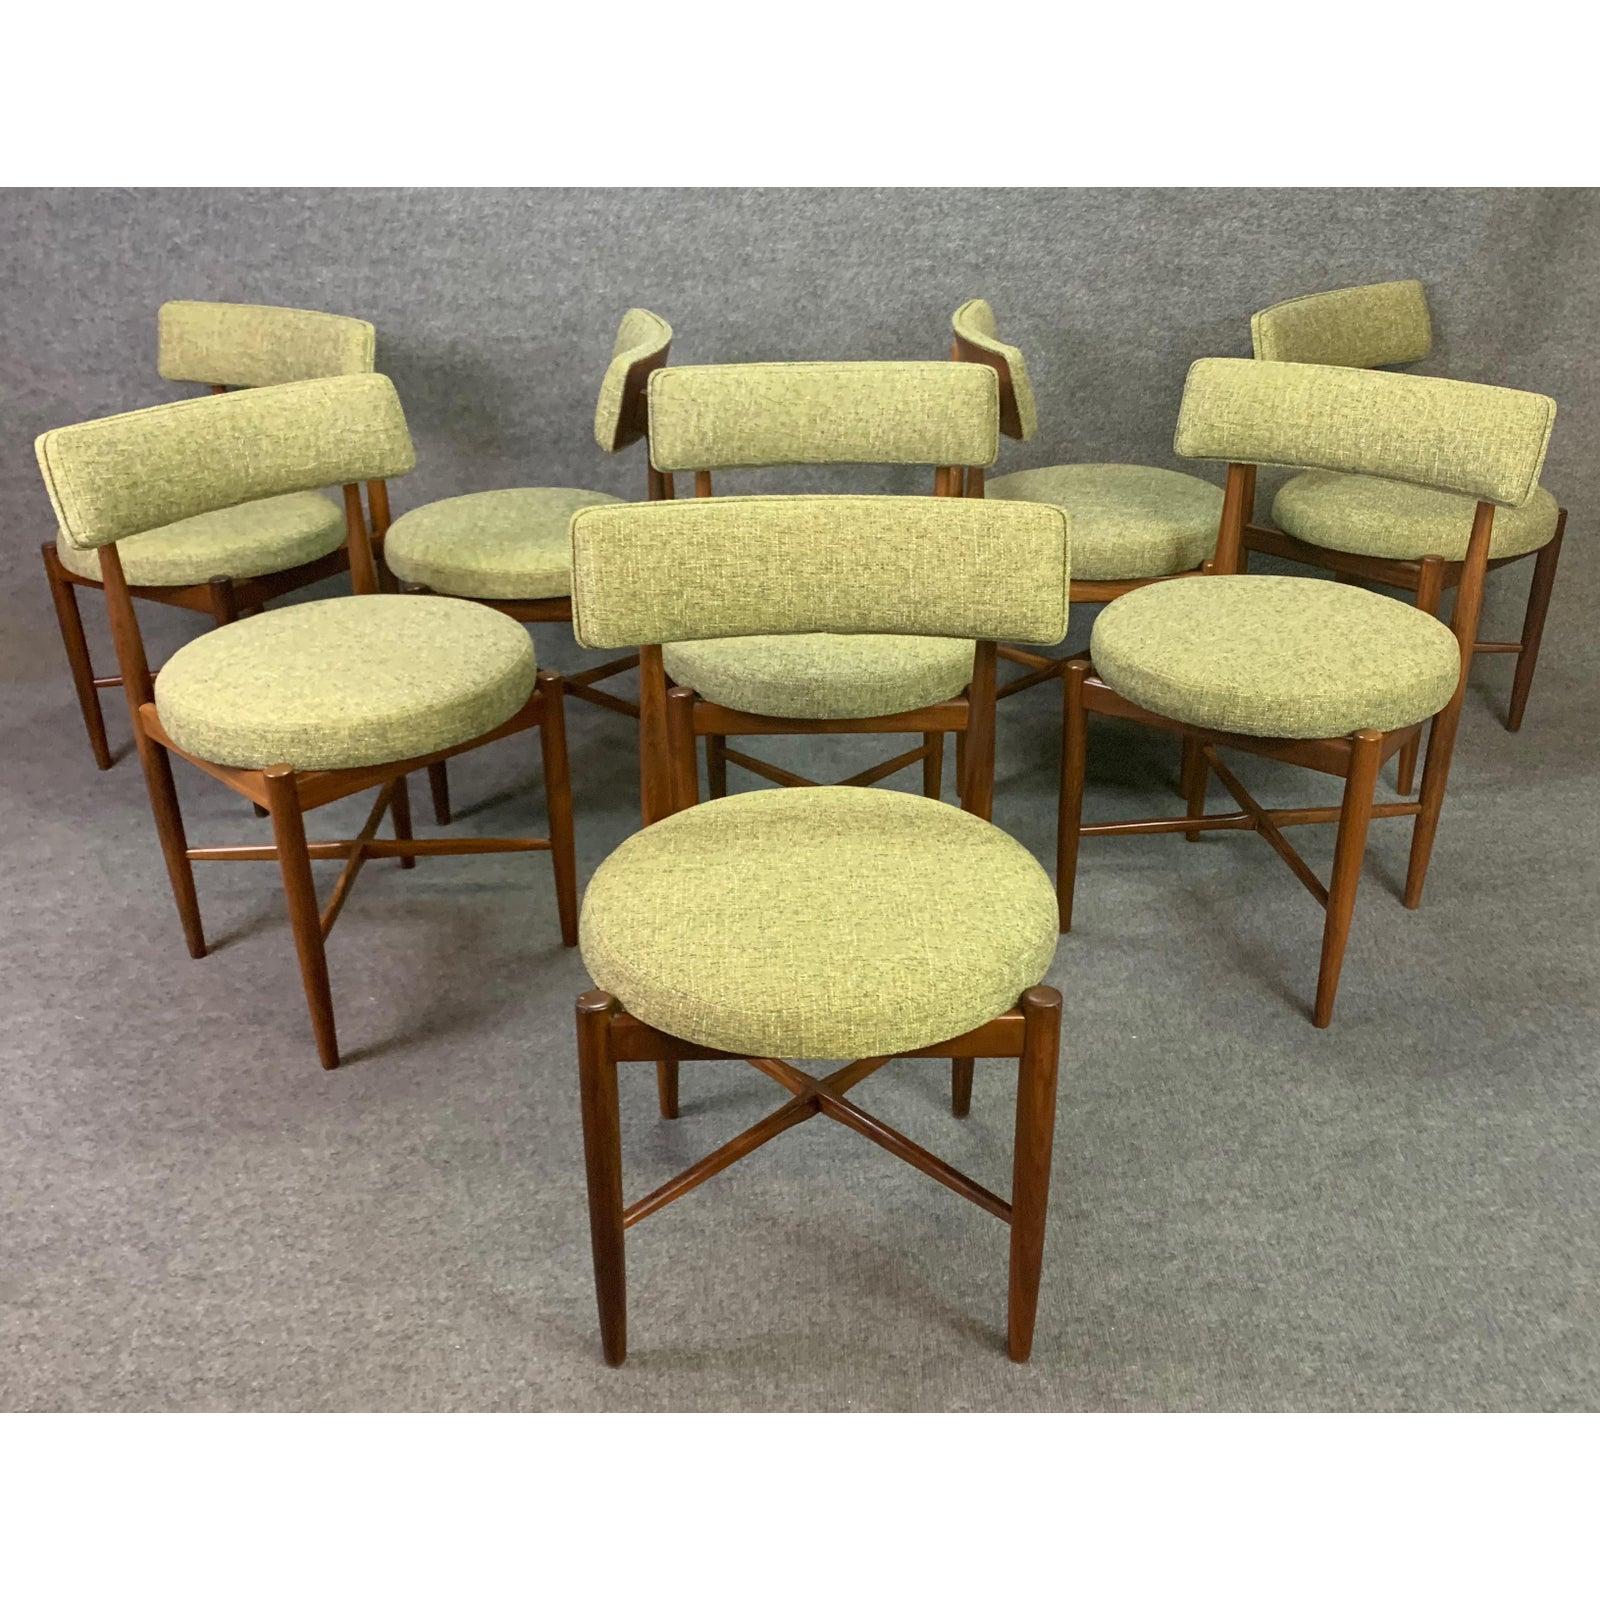 English Set of Eight Vintage British Mid-Century Modern Teak Dining Chairs by G Plan